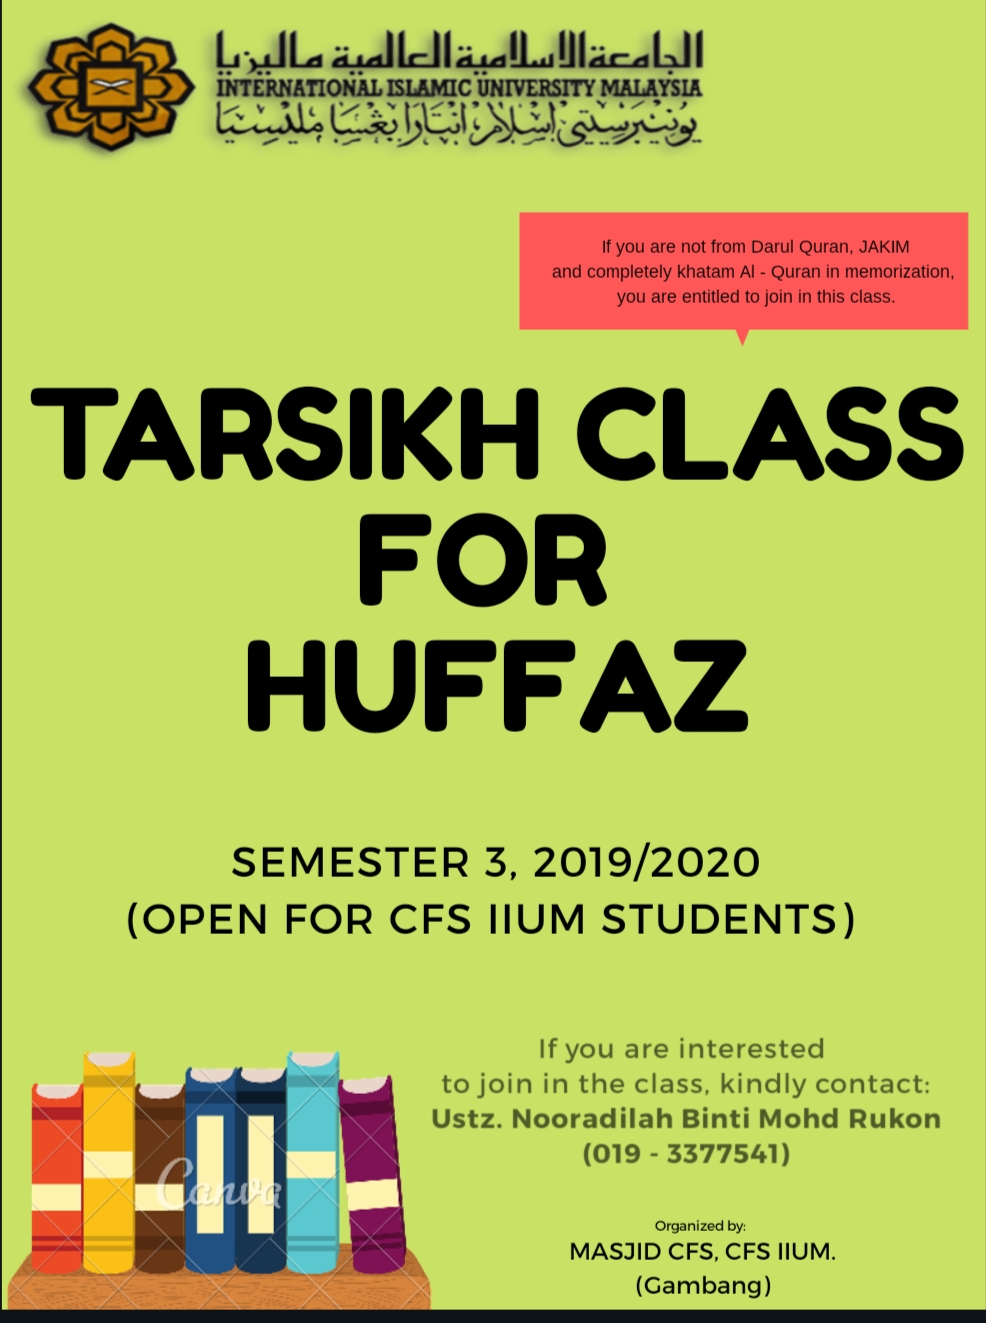 TARSIKH CLASS FOR CFS STUDENTS SEMESTER 3, 2019/2020